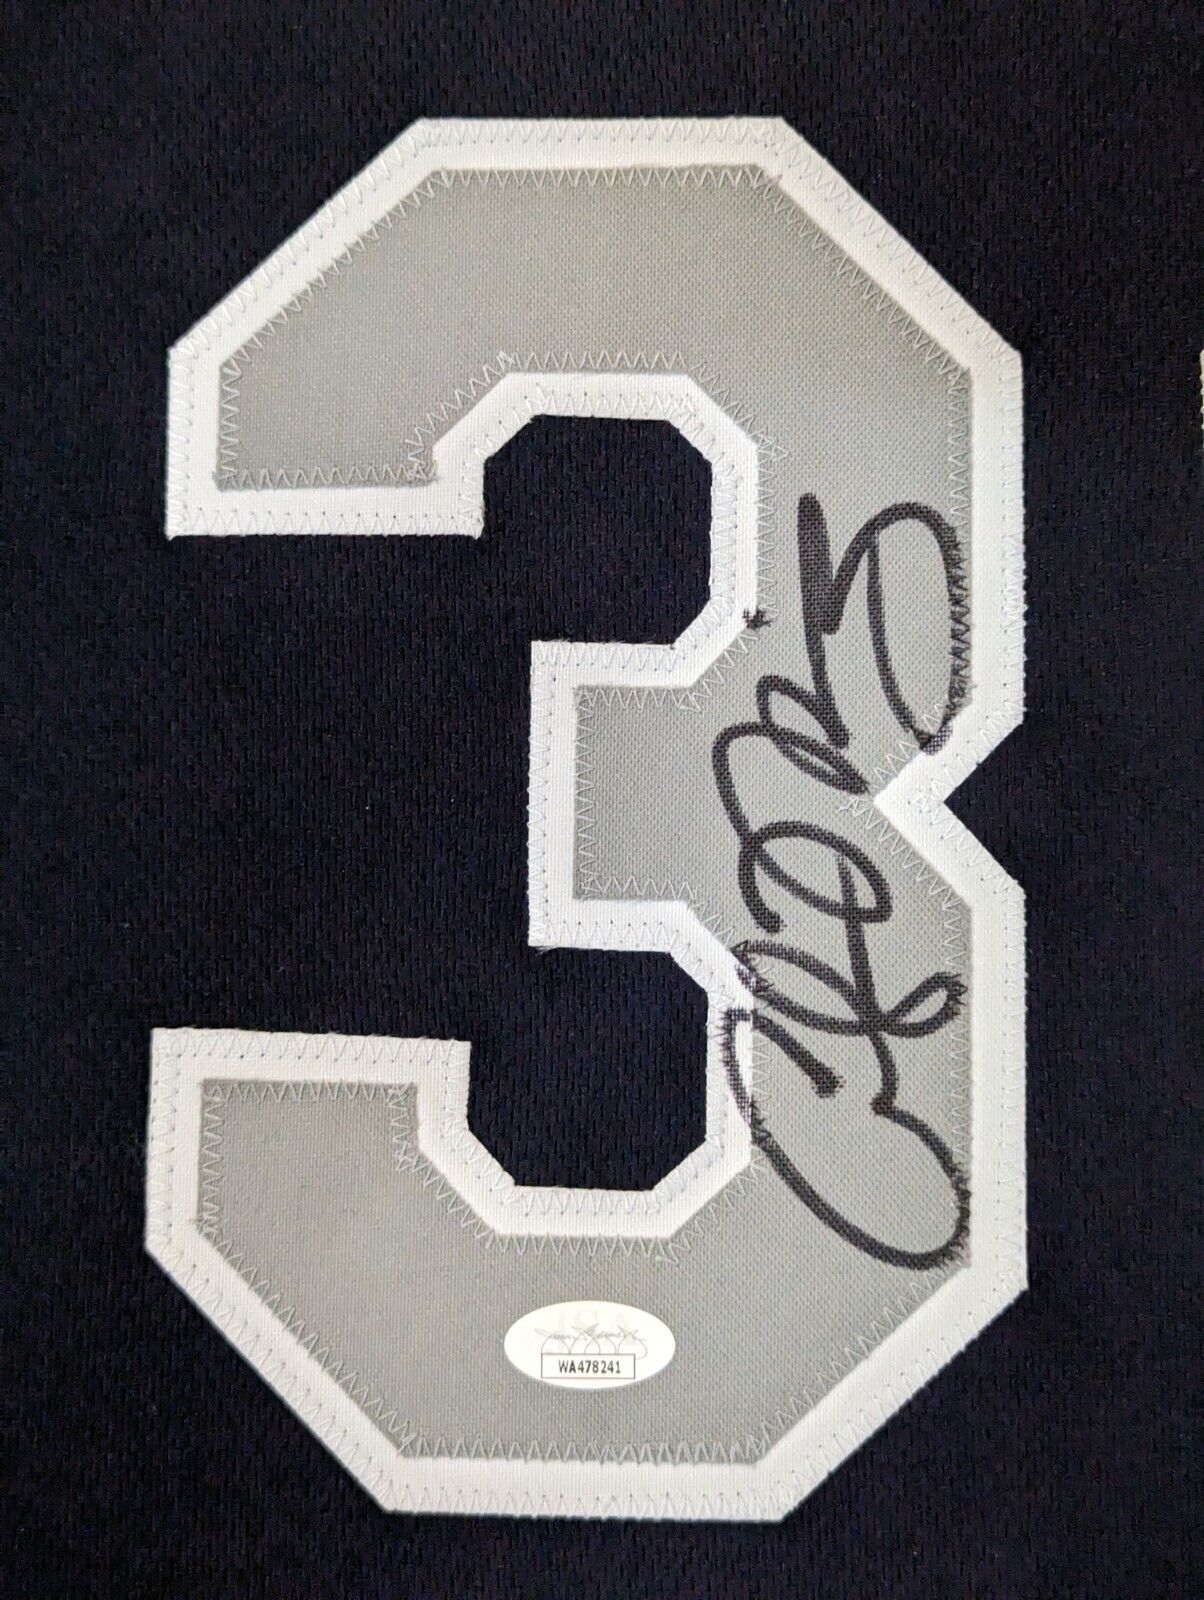 MVP Authentics Framed Georgetown Hoyas Alonzo Mourning Autographed Signed Jersey Jsa Coa 585 sports jersey framing , jersey framing